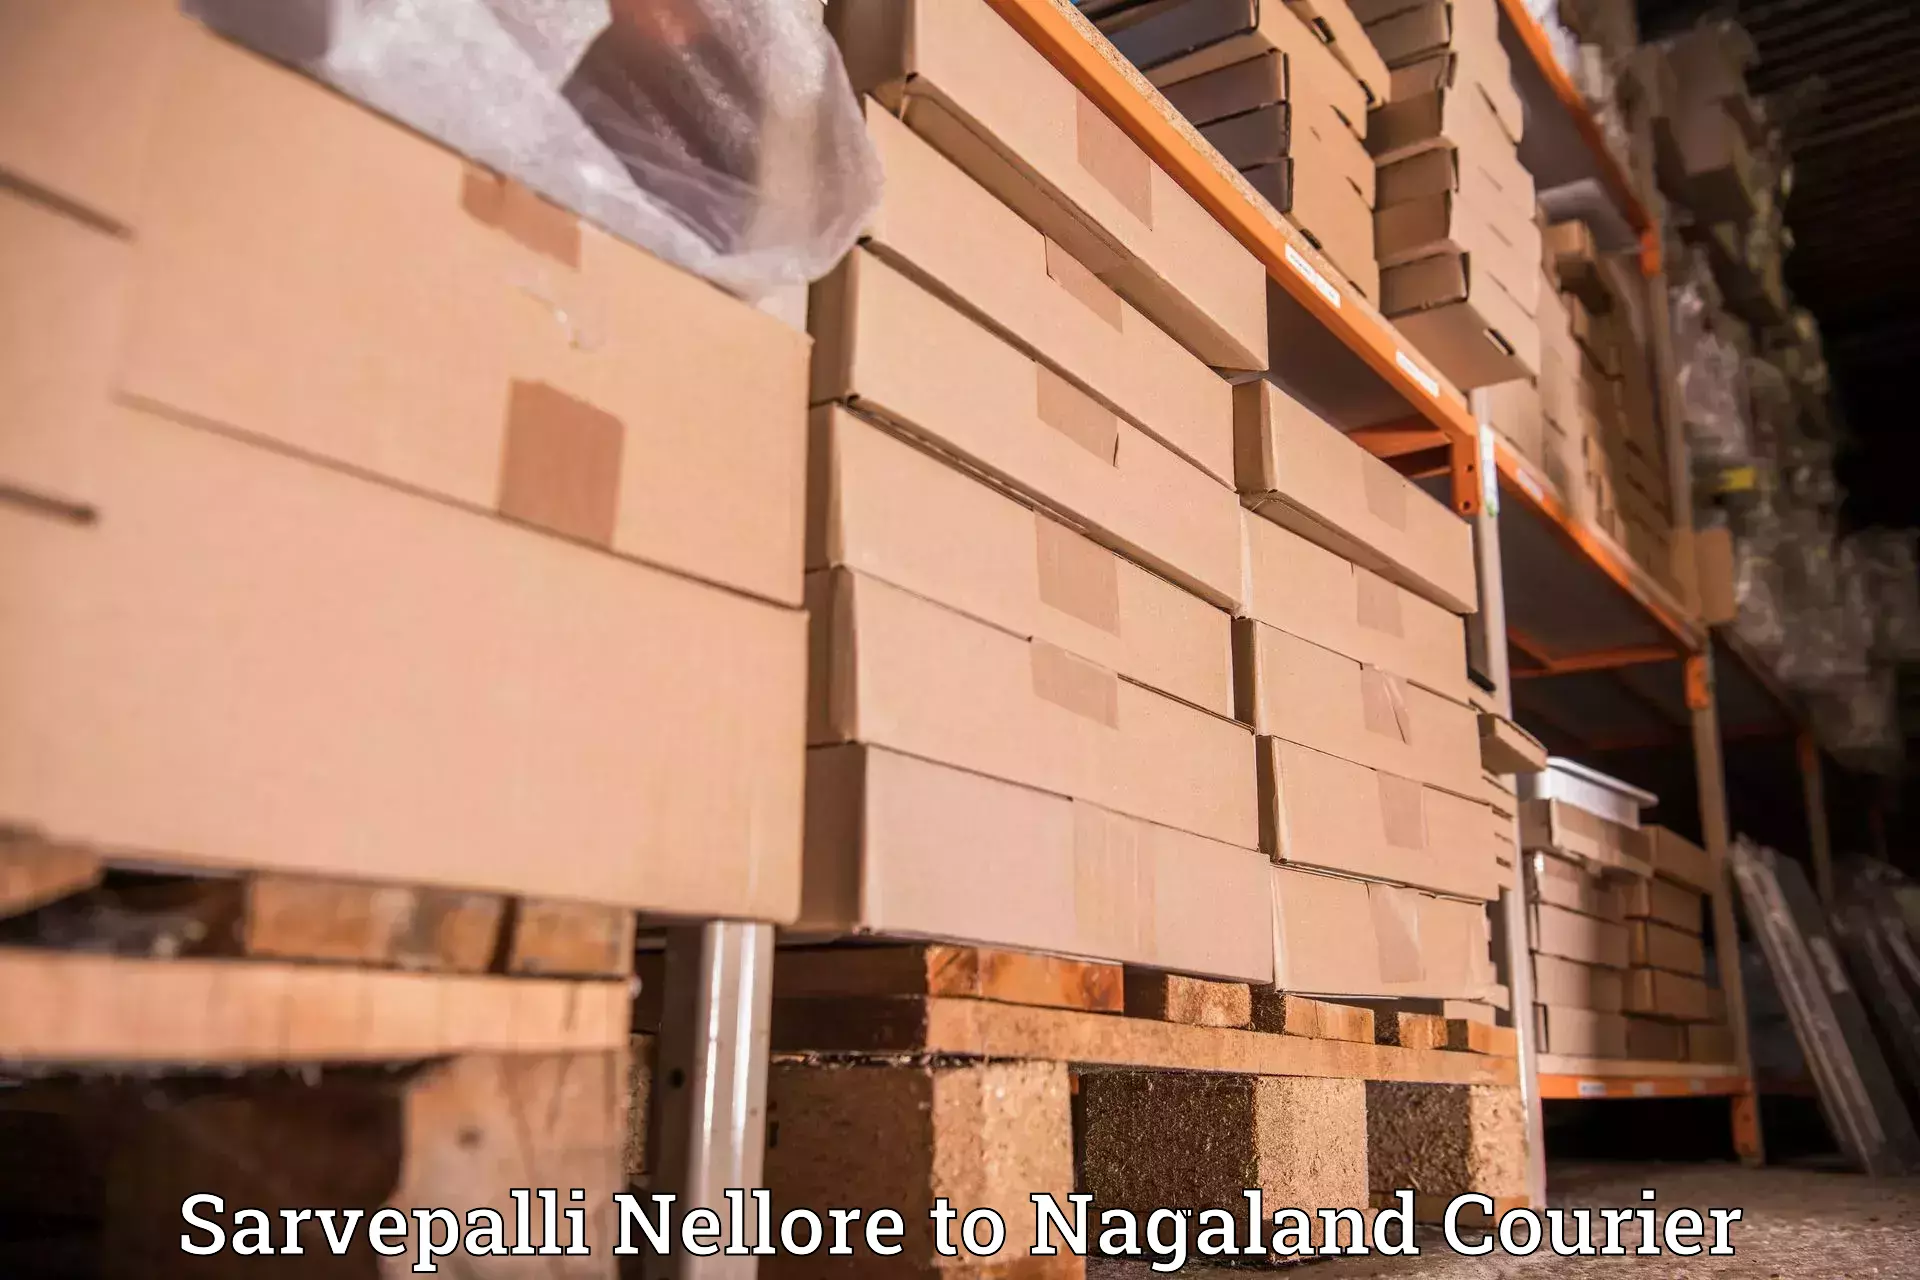 International parcel service Sarvepalli Nellore to Nagaland